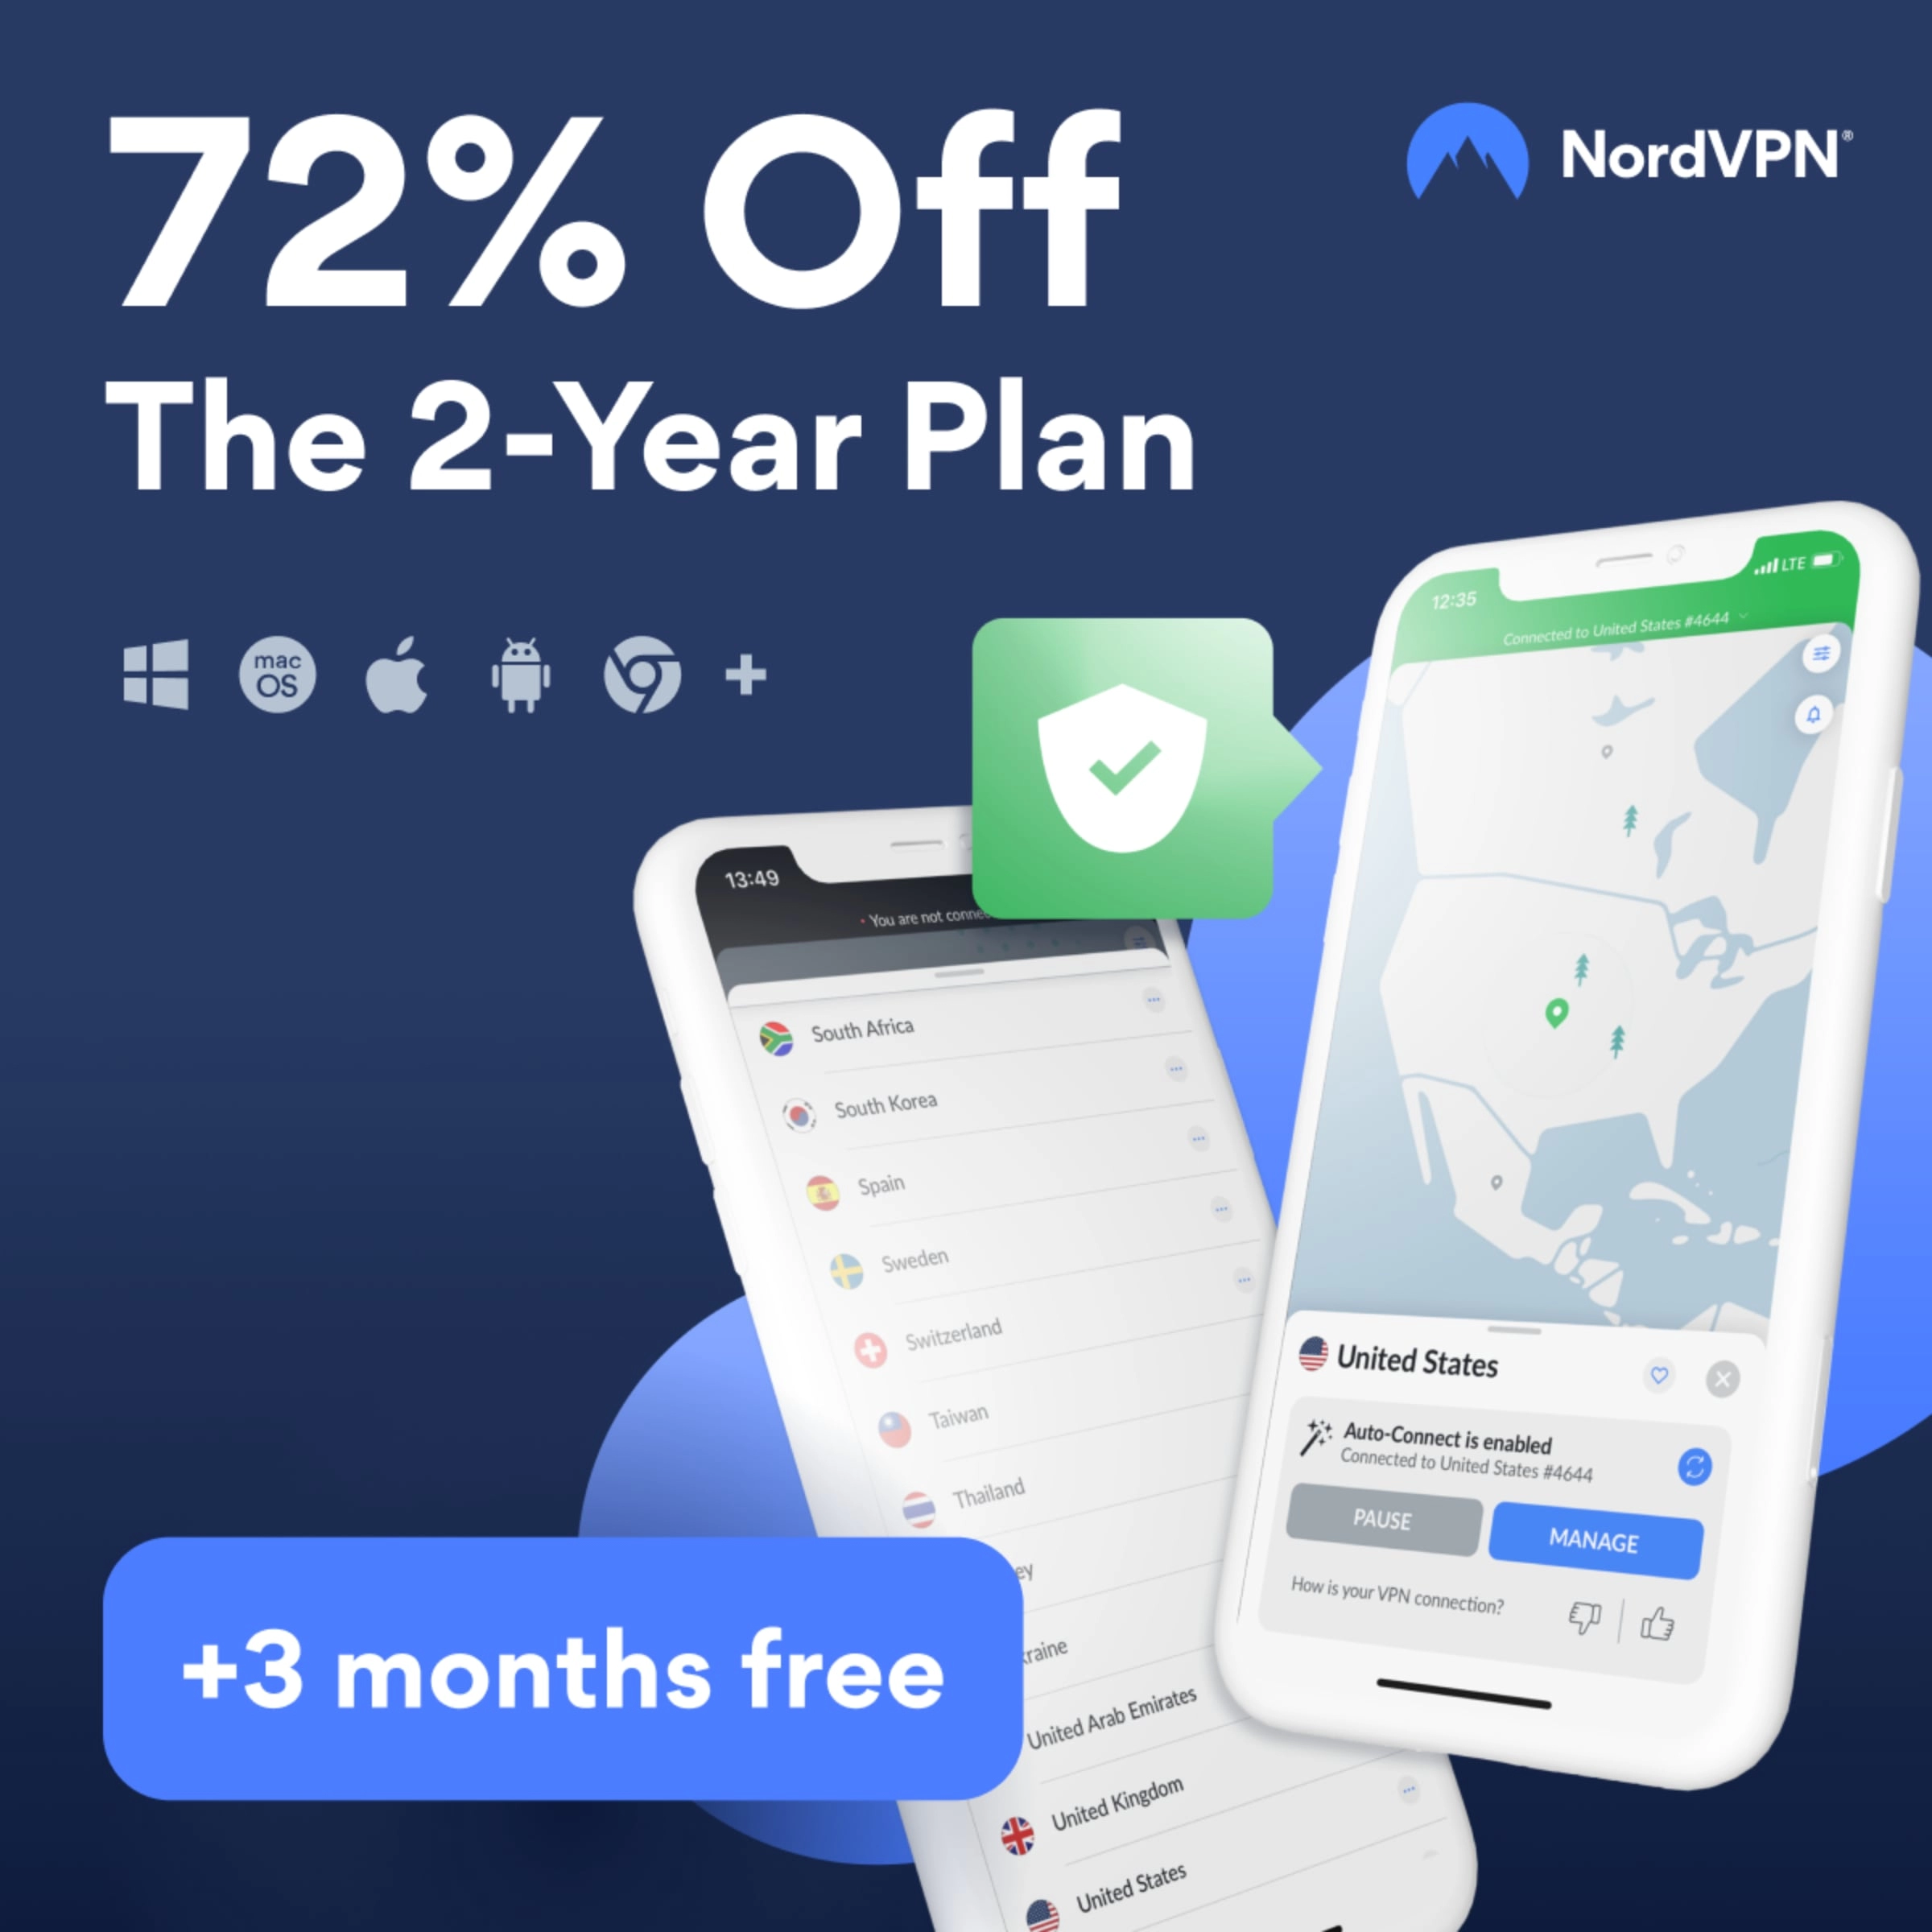 NordVPN Offer - 72% OFF + 3 months free